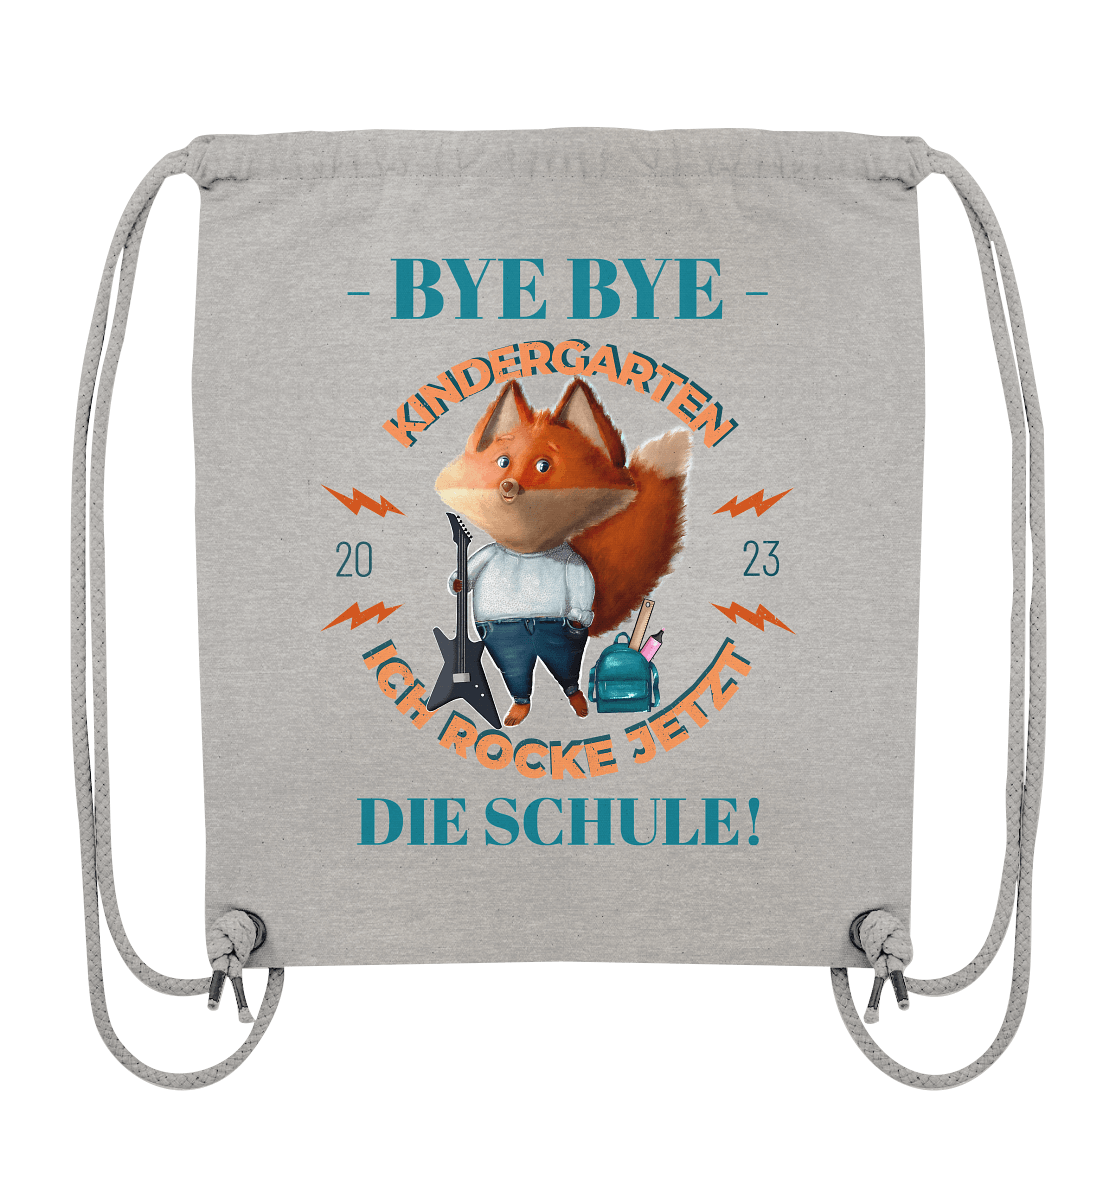 Bye-Bye-Kindergarten-ich-rocke-jetzt-die-schule-2023-Turnbeutel-grau